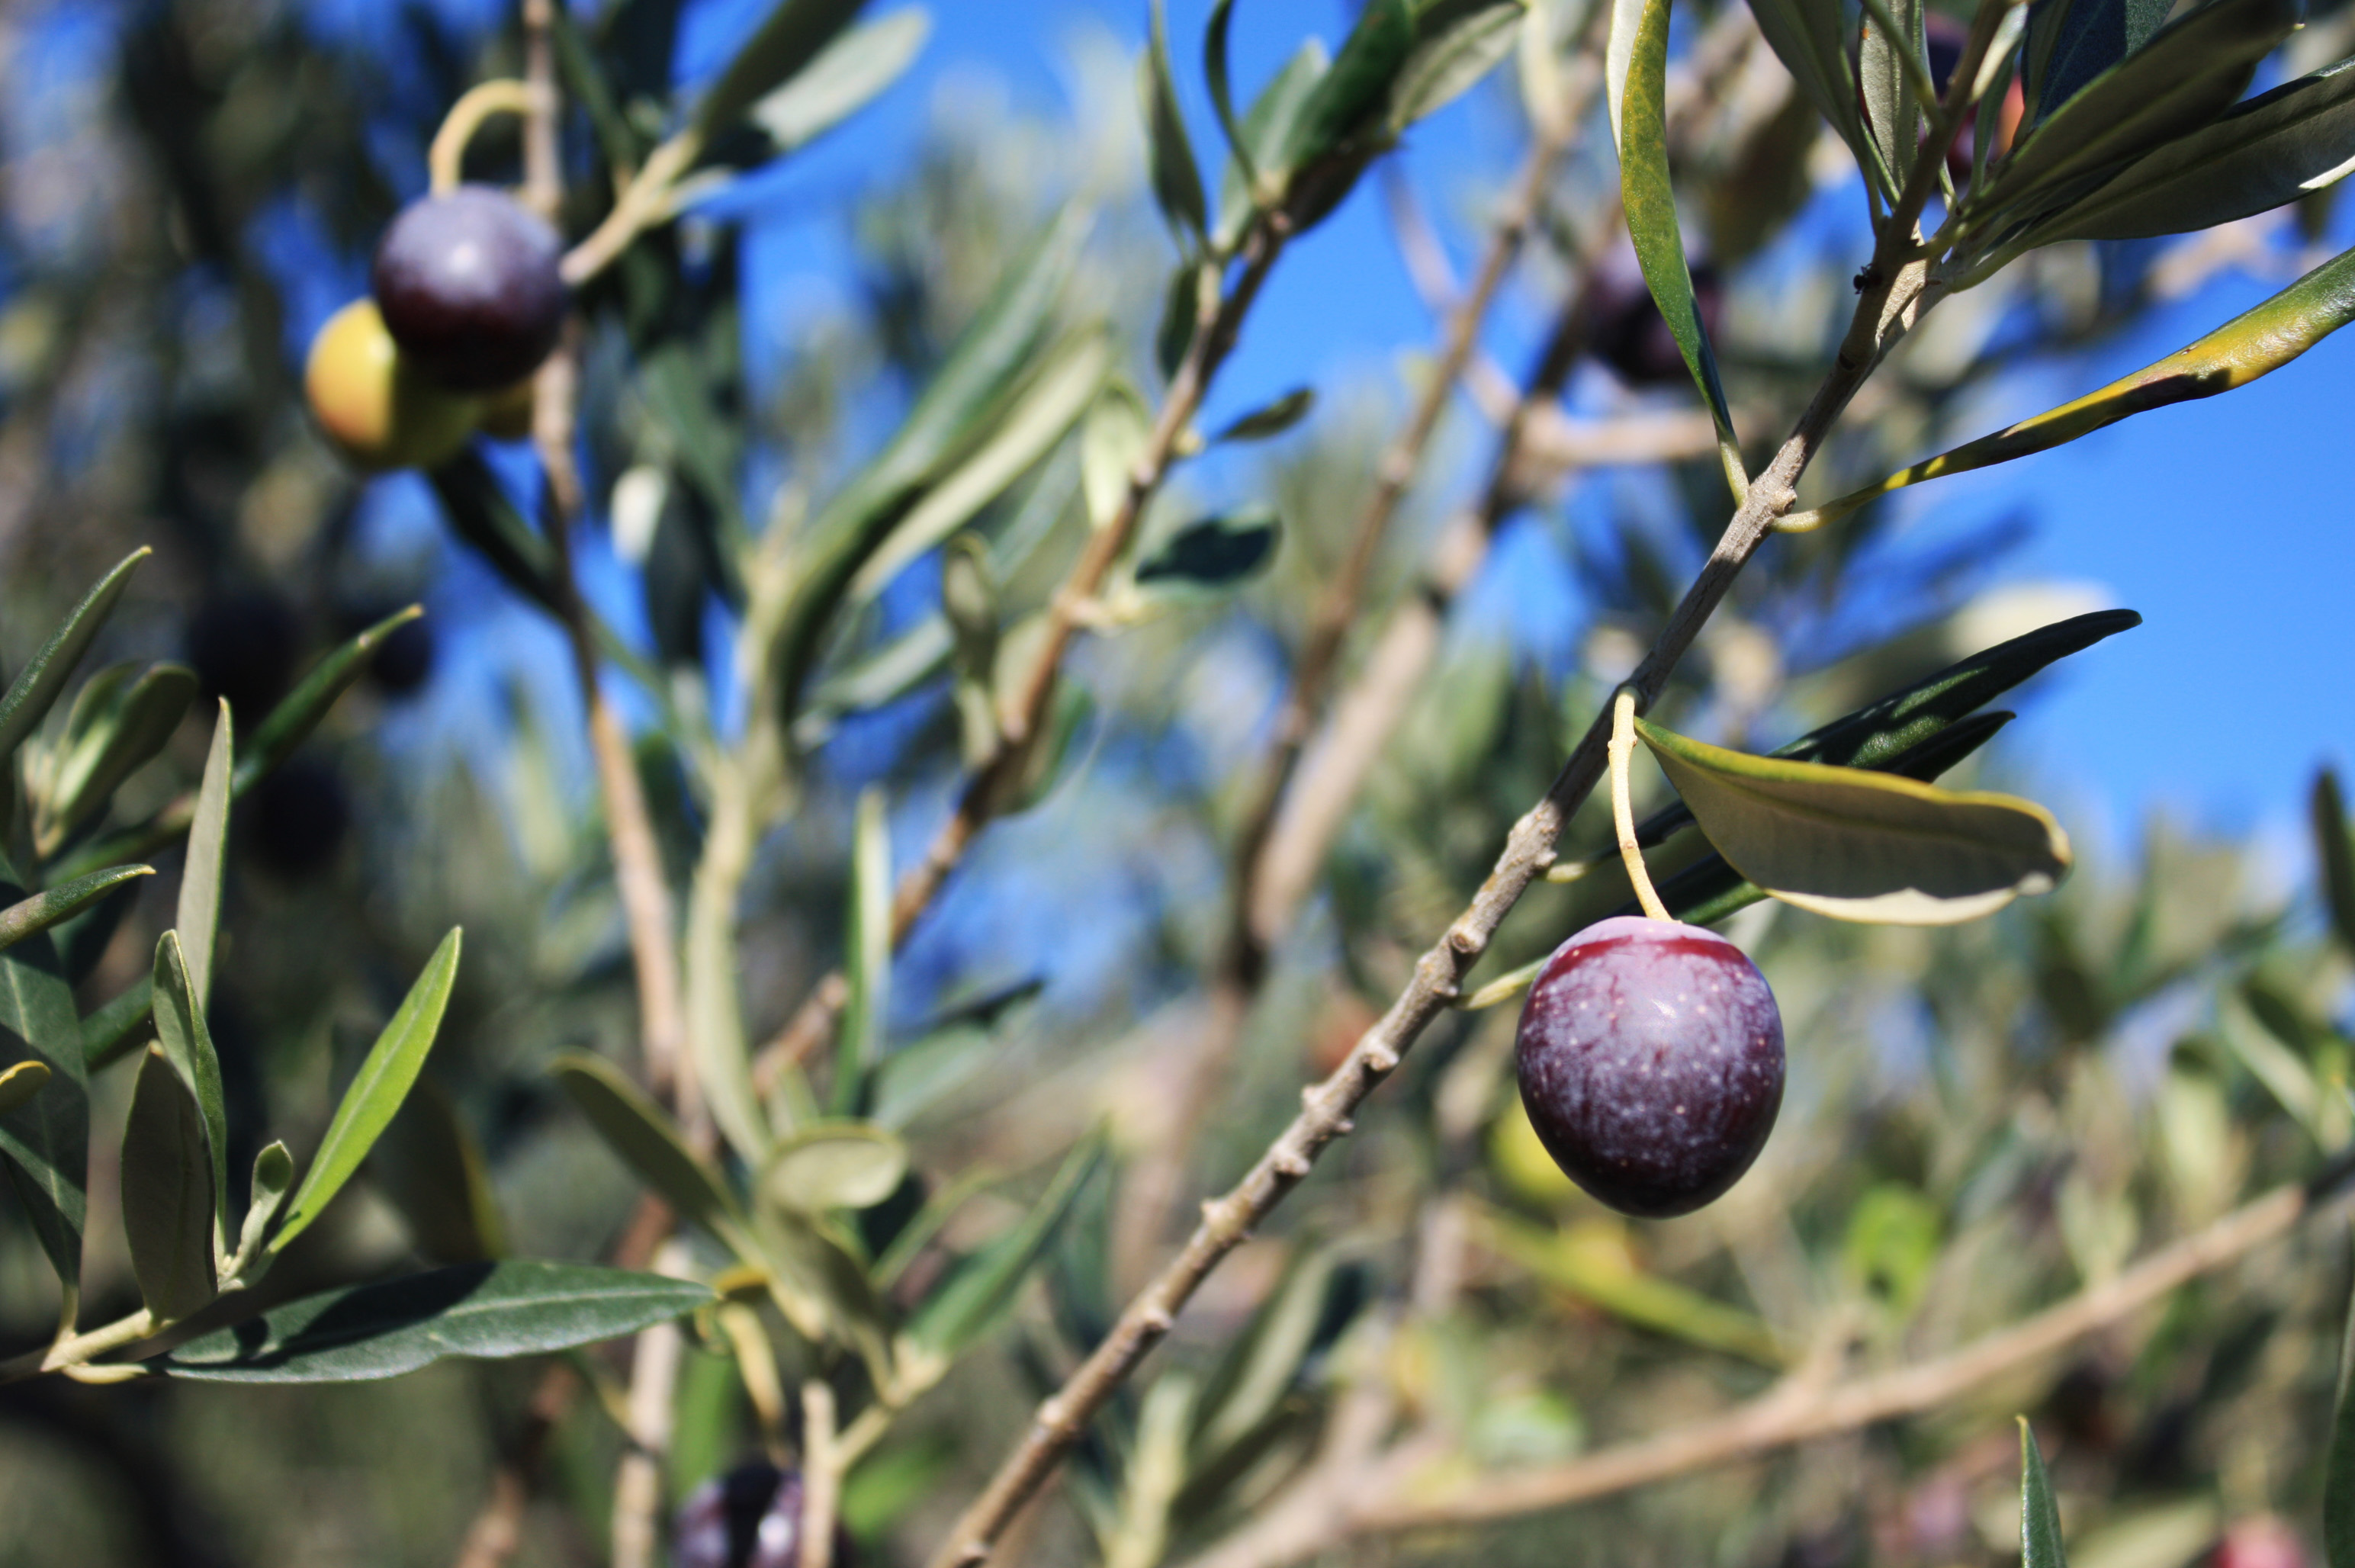 Dalmatian olive trees